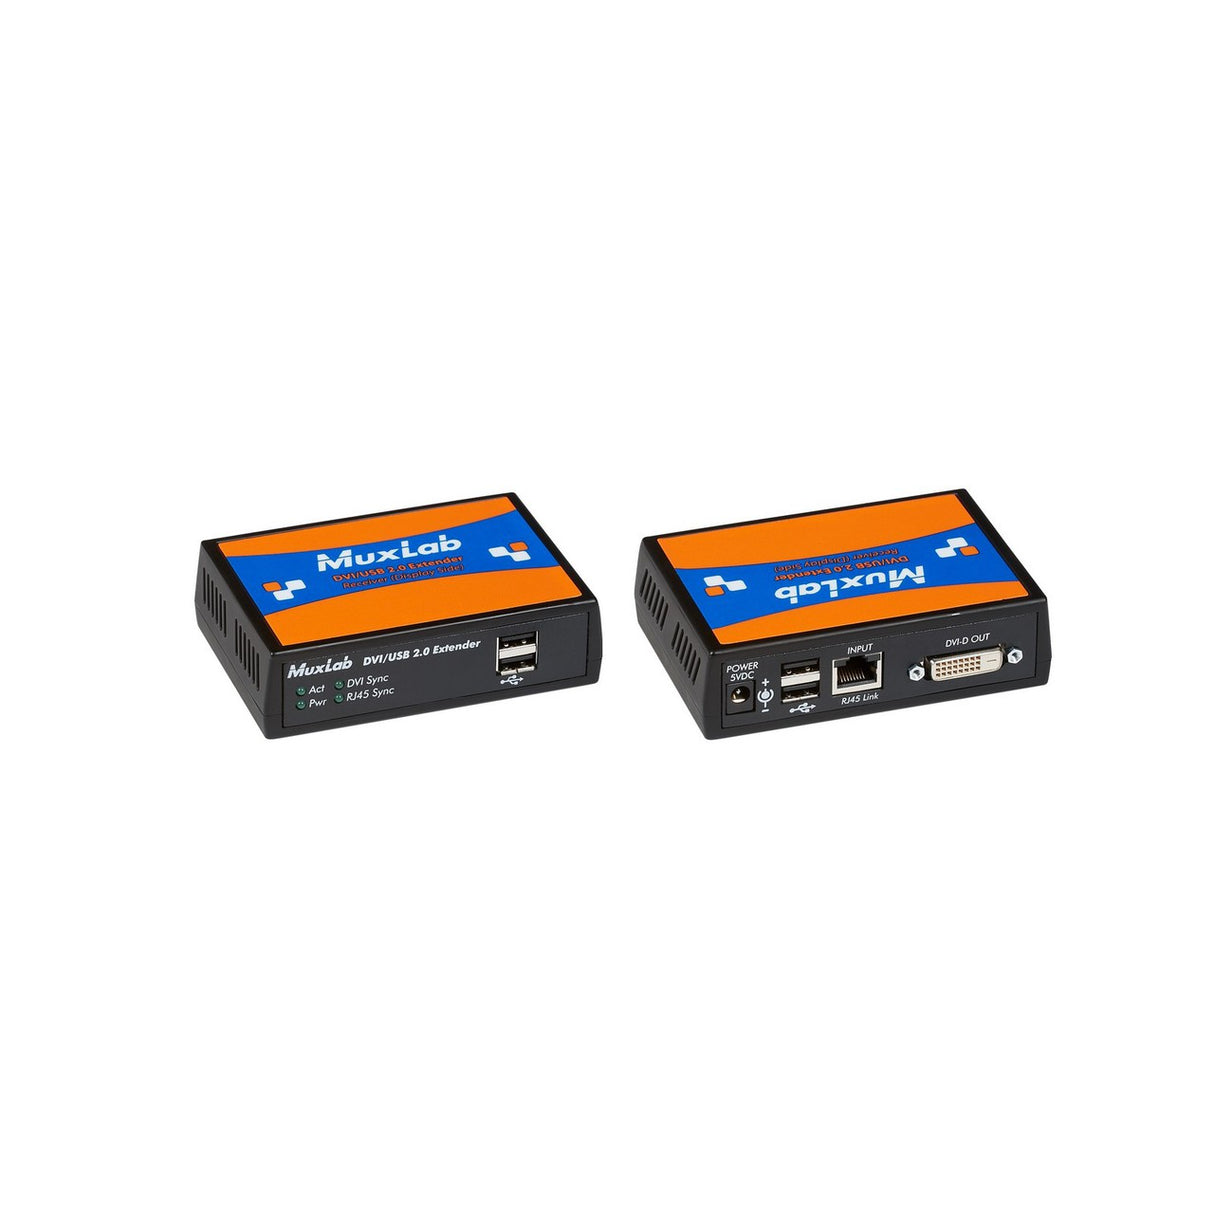 MuxLab DVI USB 2.0 HDBaseT Extender Kit 500391 | DVI USB 2.0 HDBASET Video Extender Kit Cat5e/6 RJ45 Plug Cable Supports 4K Resolution Transmitter and Receiver